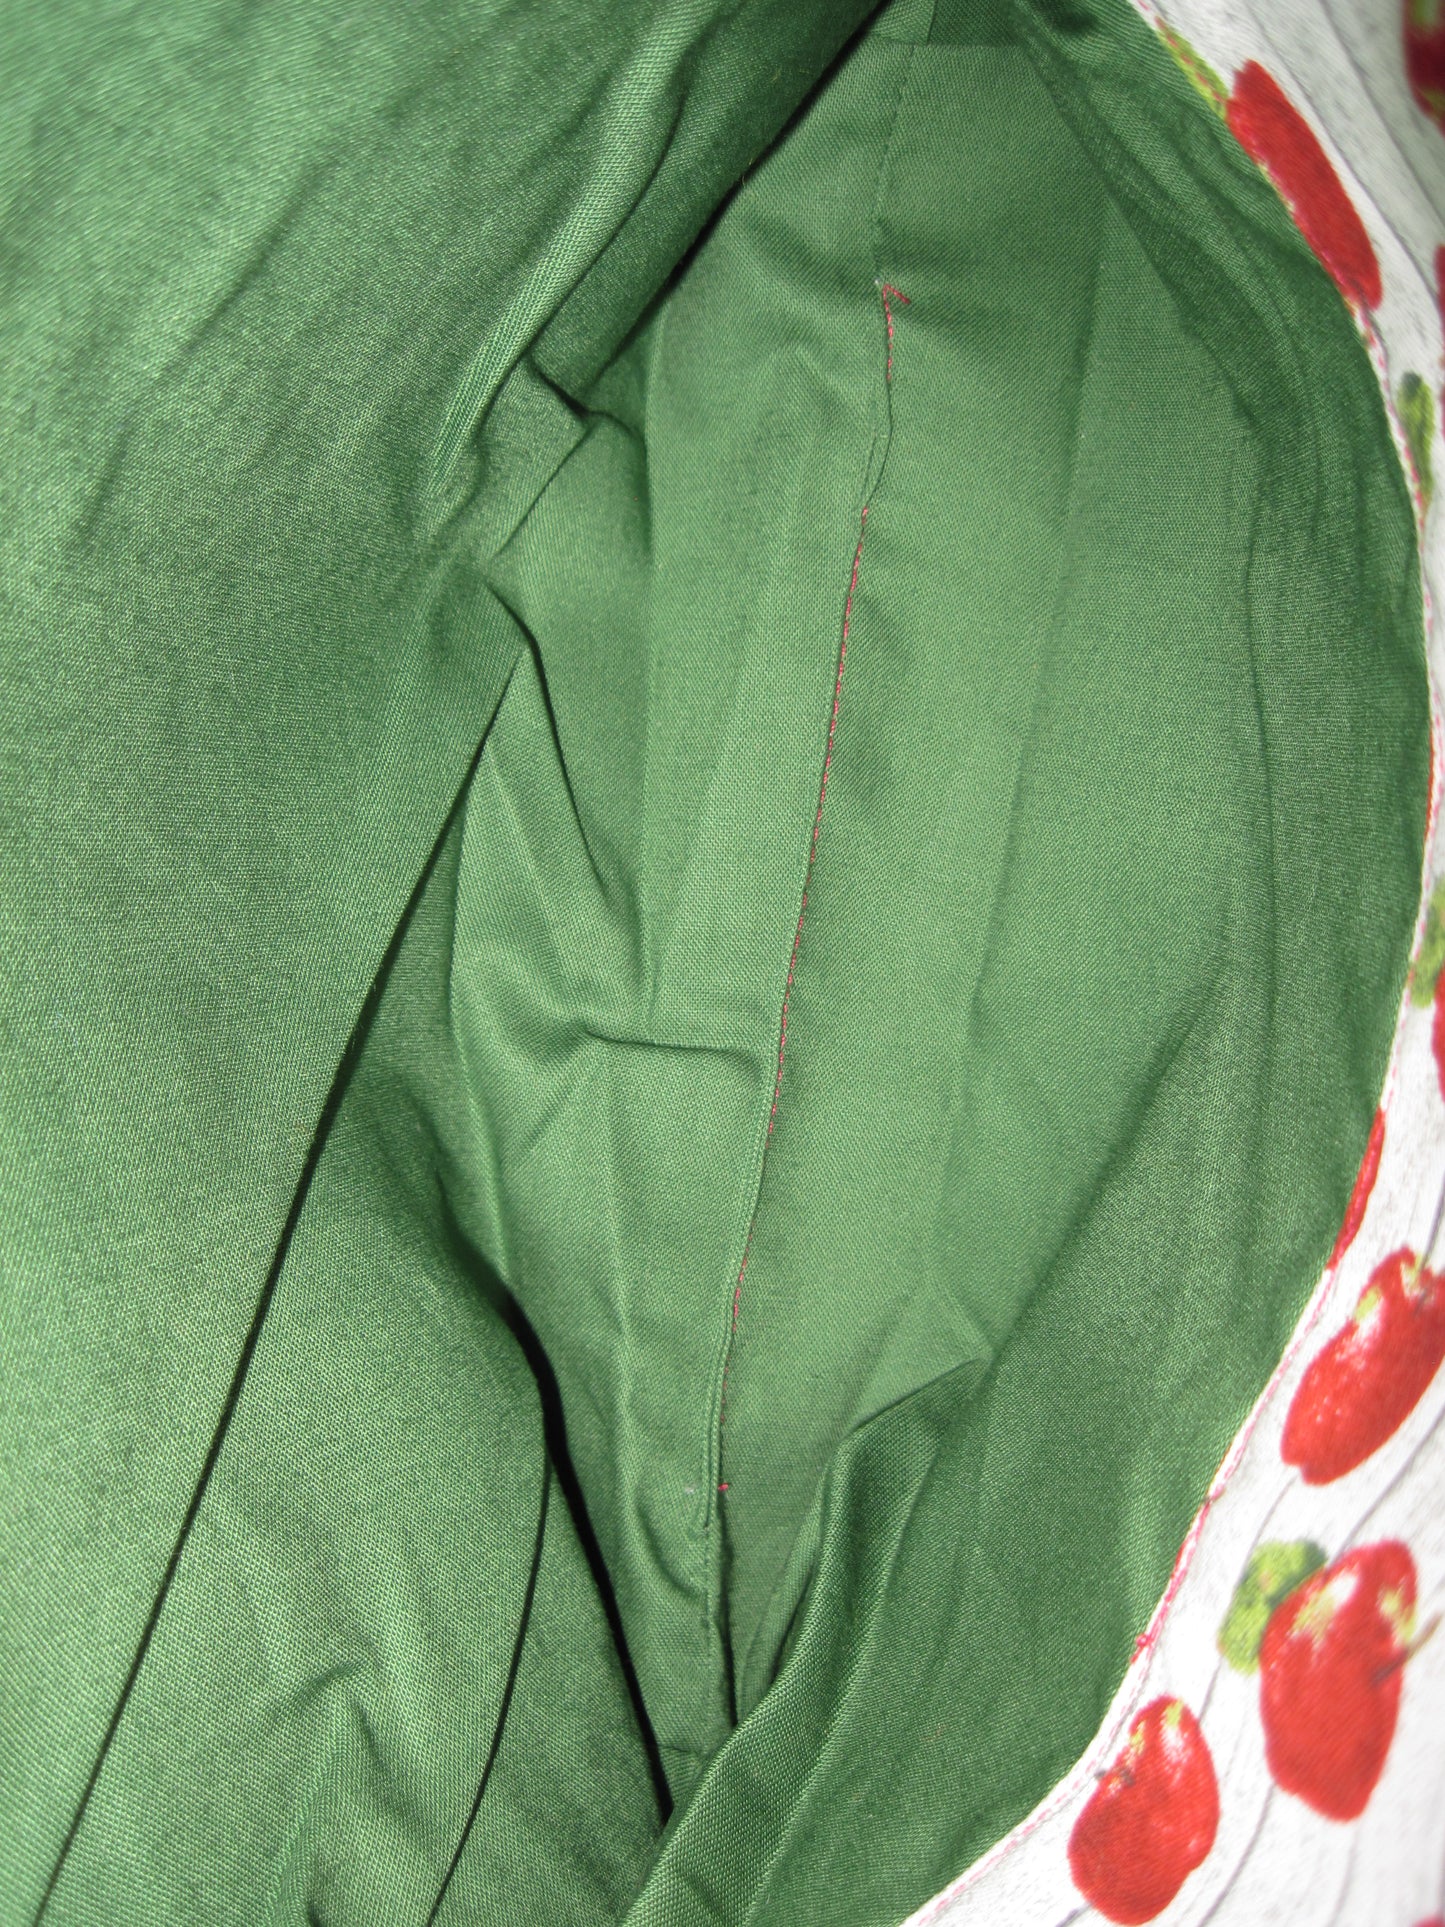 Medium Apple with Green zipper Project bag